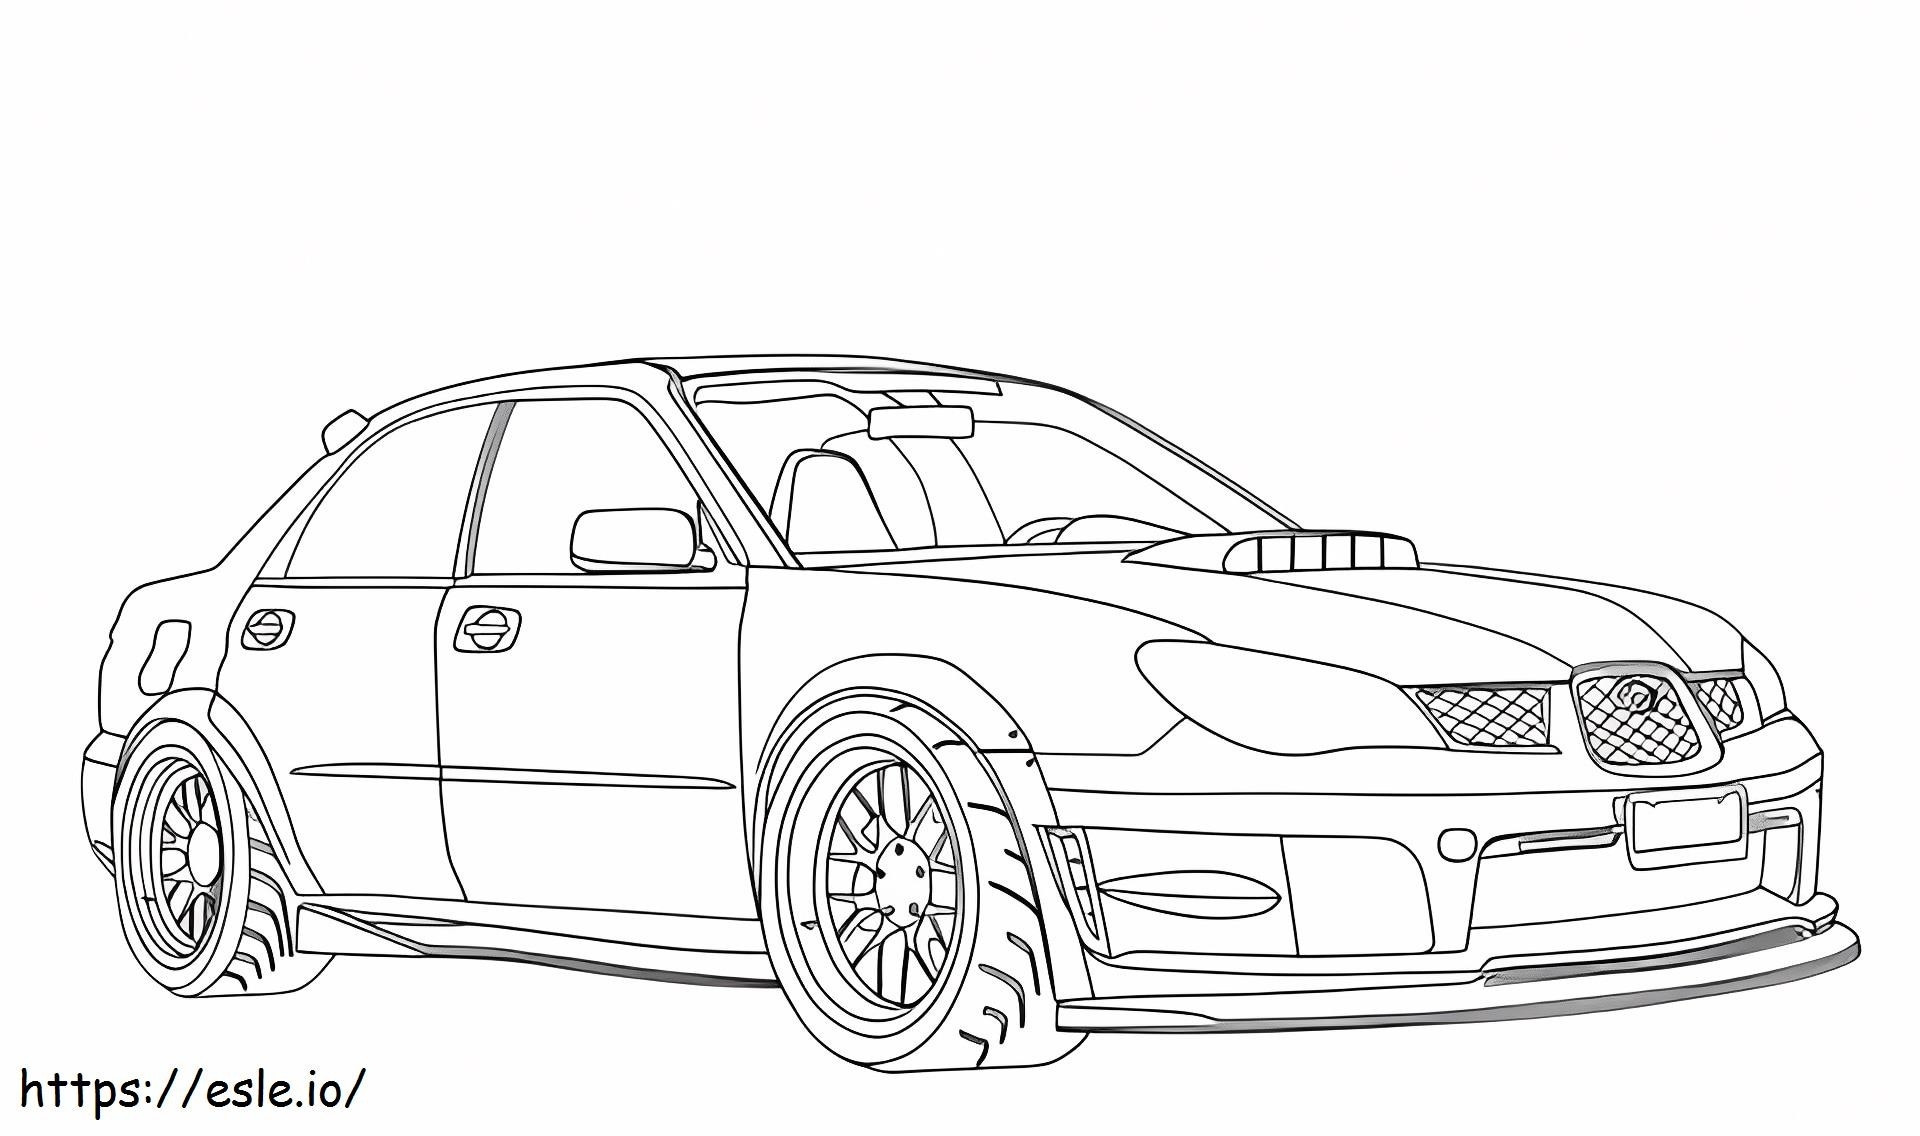 1527236271 Subaru Impreza Wrx Sti coloring page